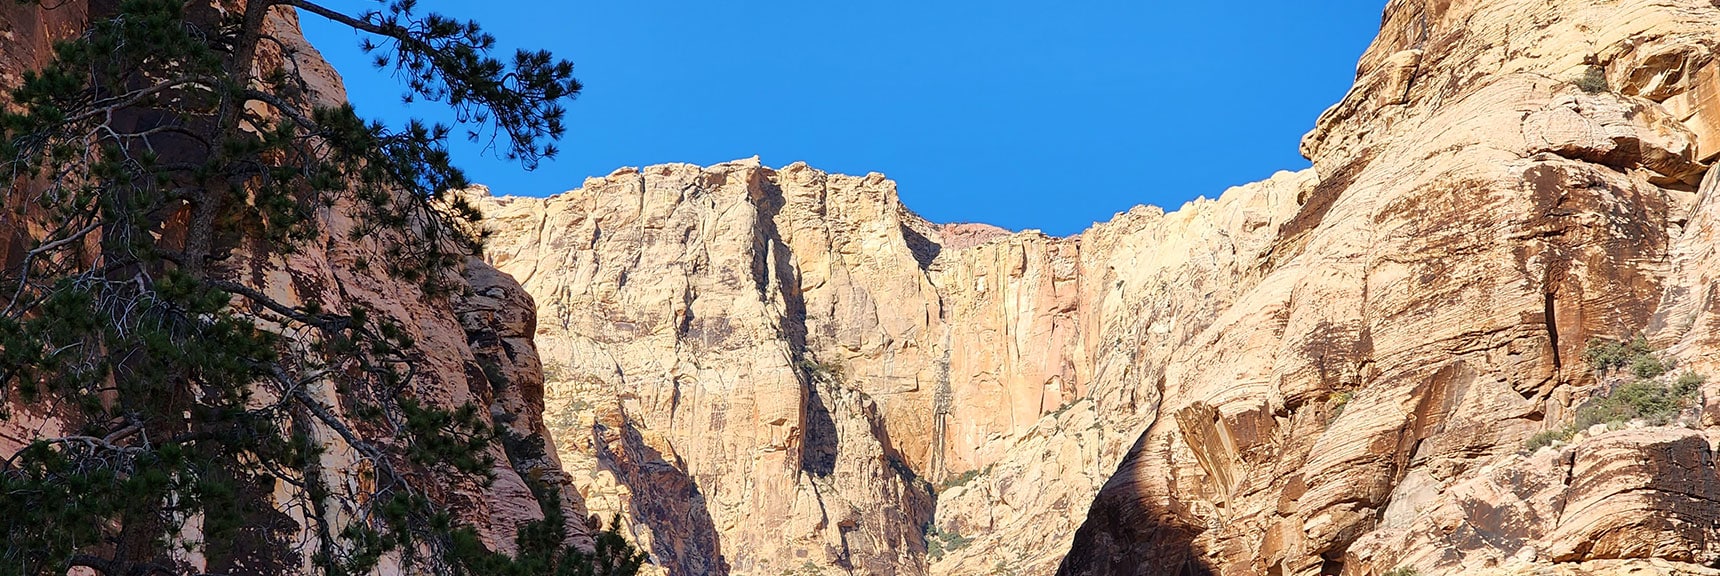 Closer View of Sheer Cliffs on the Upper Crest Ridgeline. | Rock Climber Observations | Pine Creek Canyon | Rainbow Mountain Wilderness, Nevada